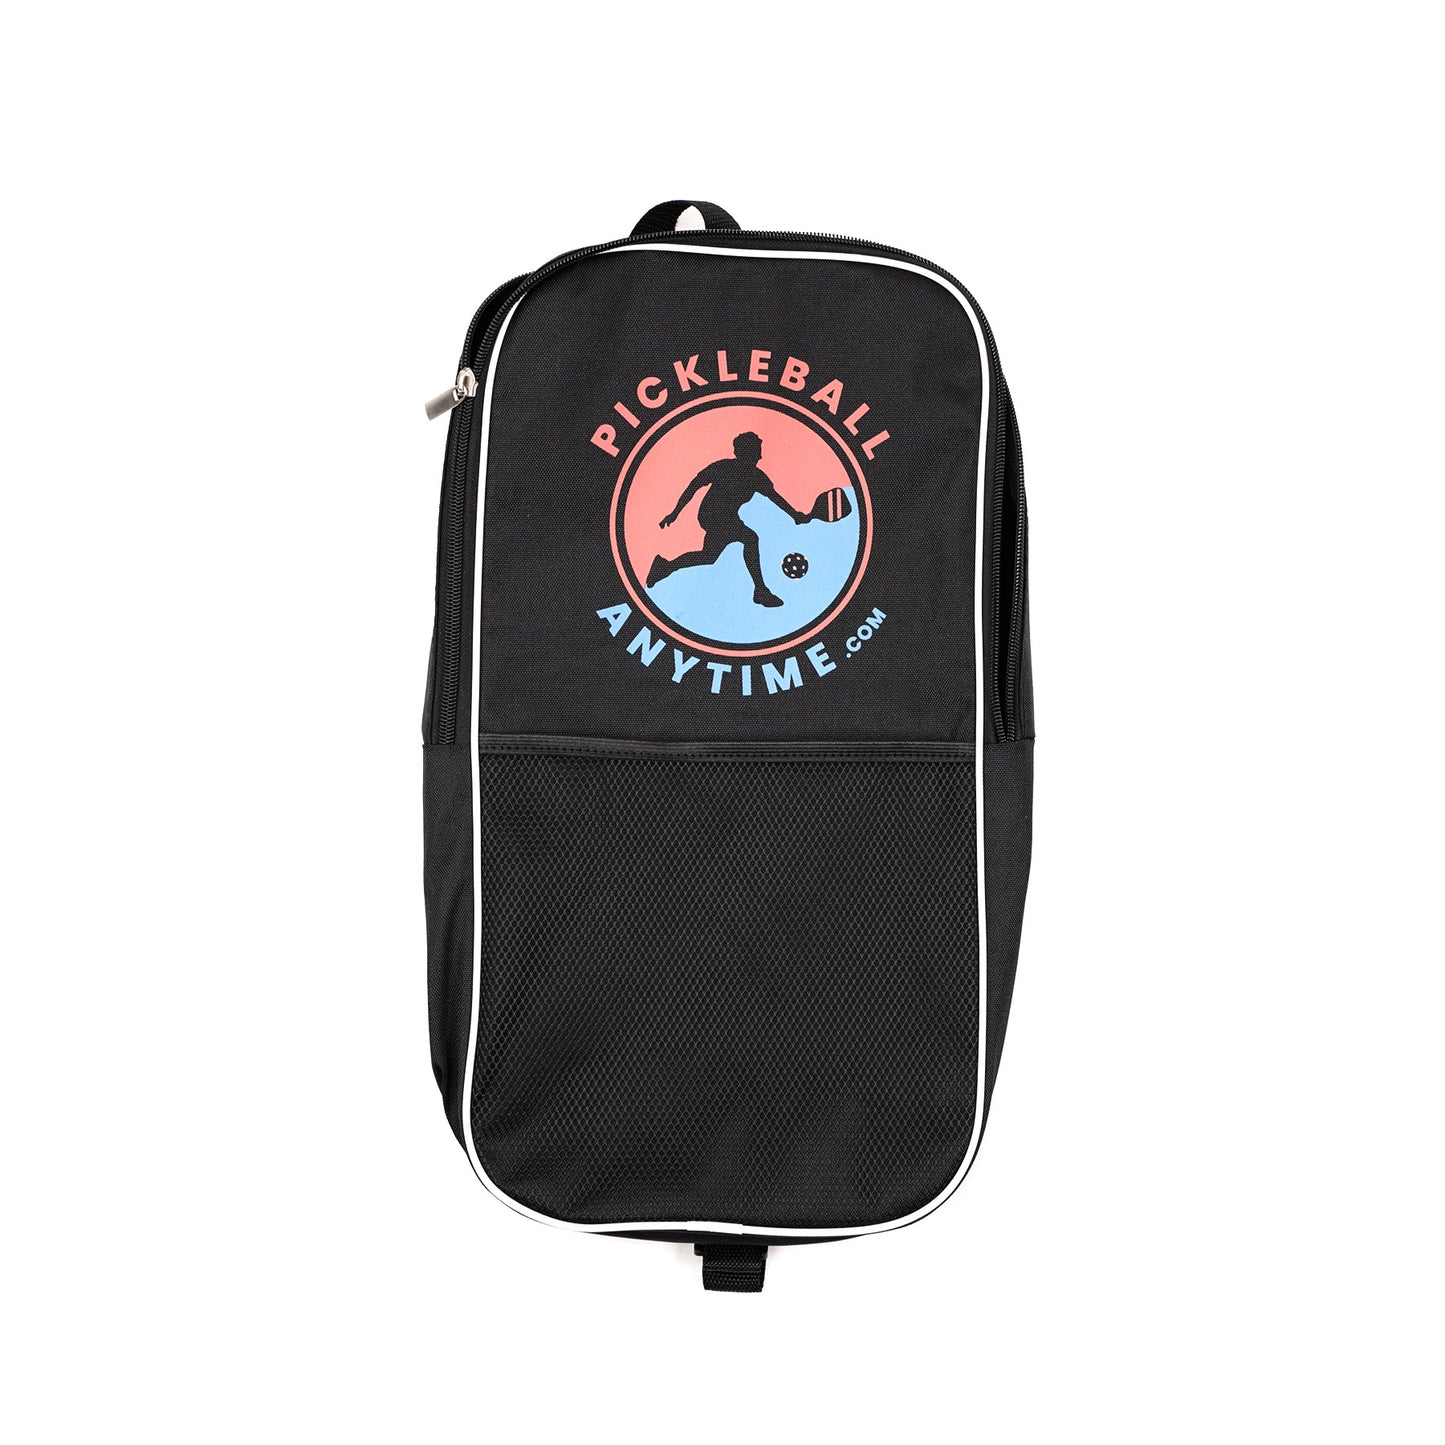 Pickleball Paddle Portable Carry Bag